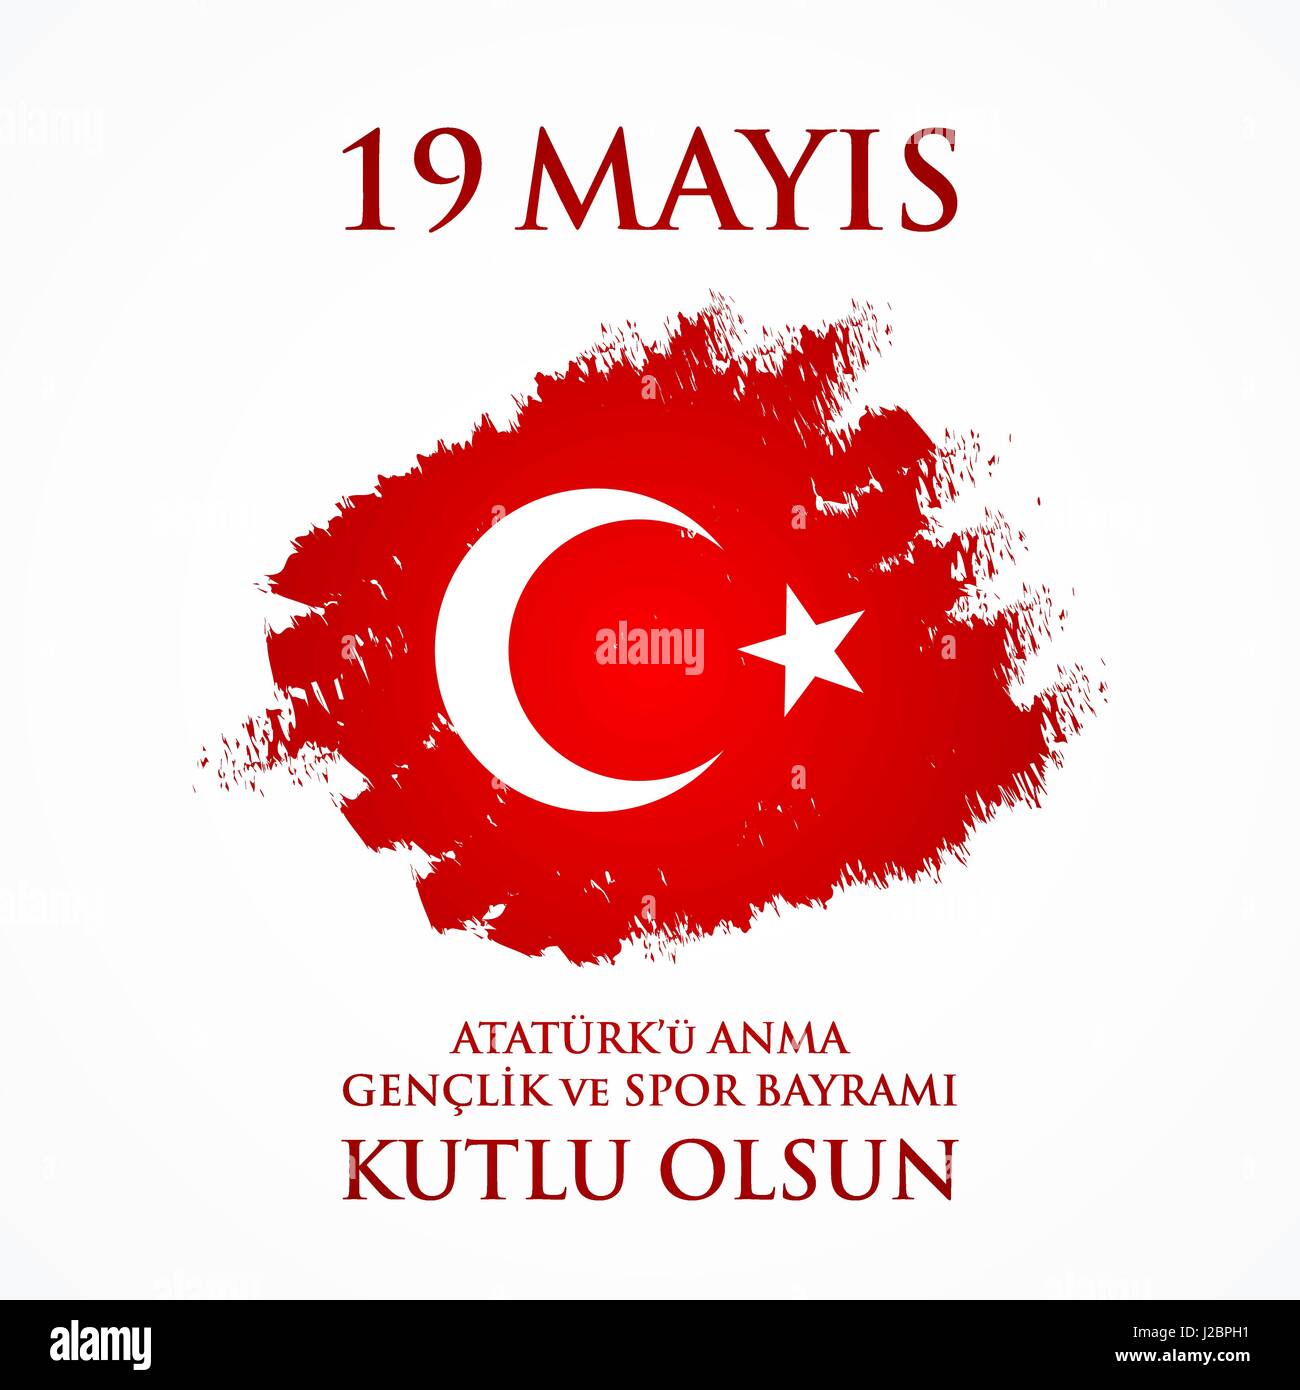 19 Mayis u'Ataturk anma, genclik ve spor bayrami. La traduction du turc : 19 mai commémoration d'Atatürk, de la jeunesse et des sports 24. Illustration de Vecteur